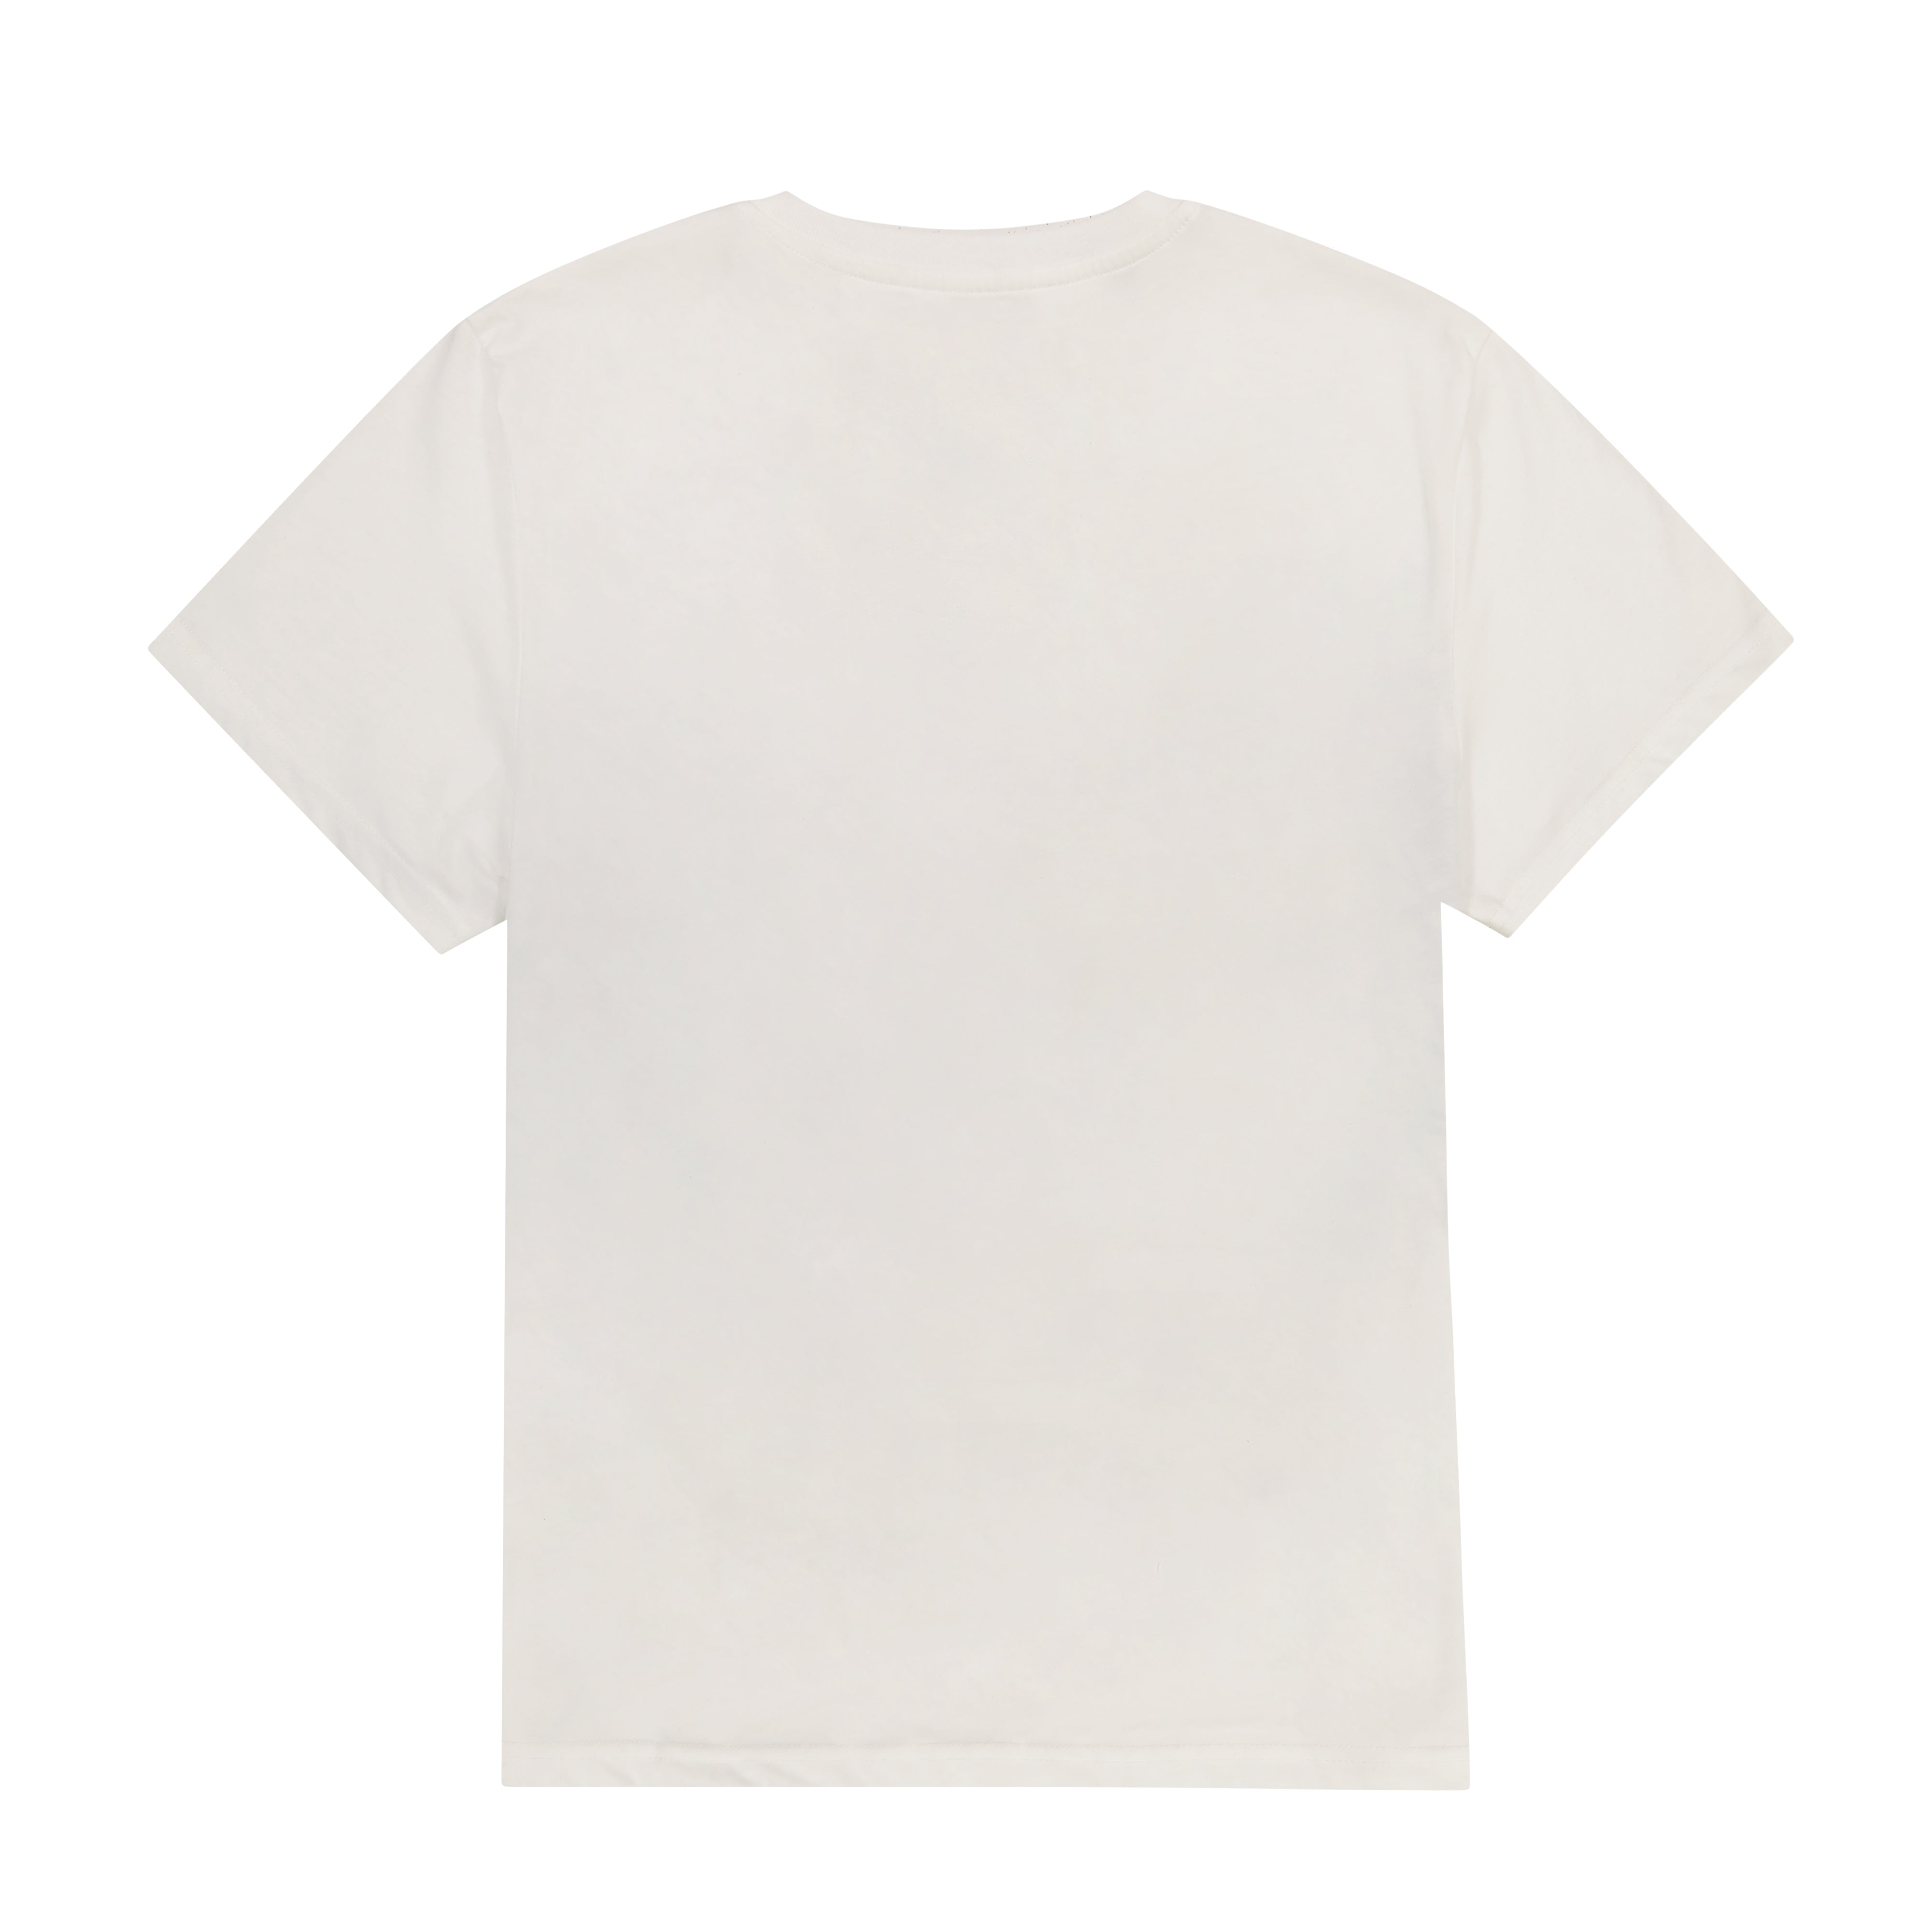 Ed Hardy Cloud Dancer White T-Shirt